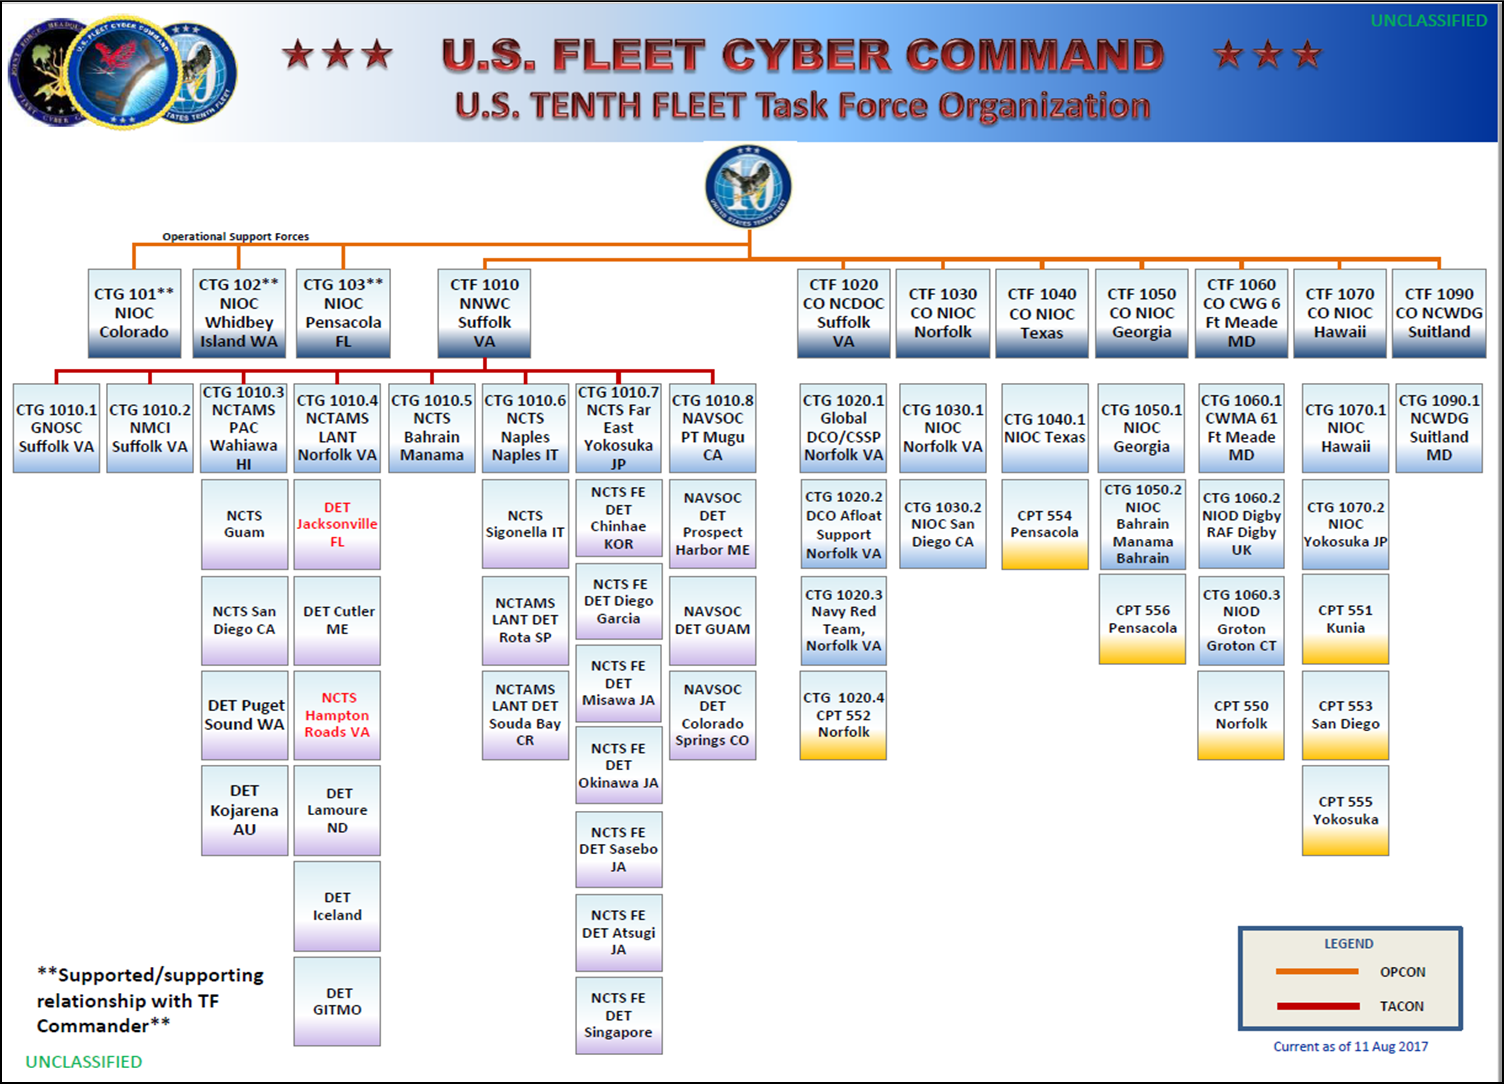 Navy Organization Chart